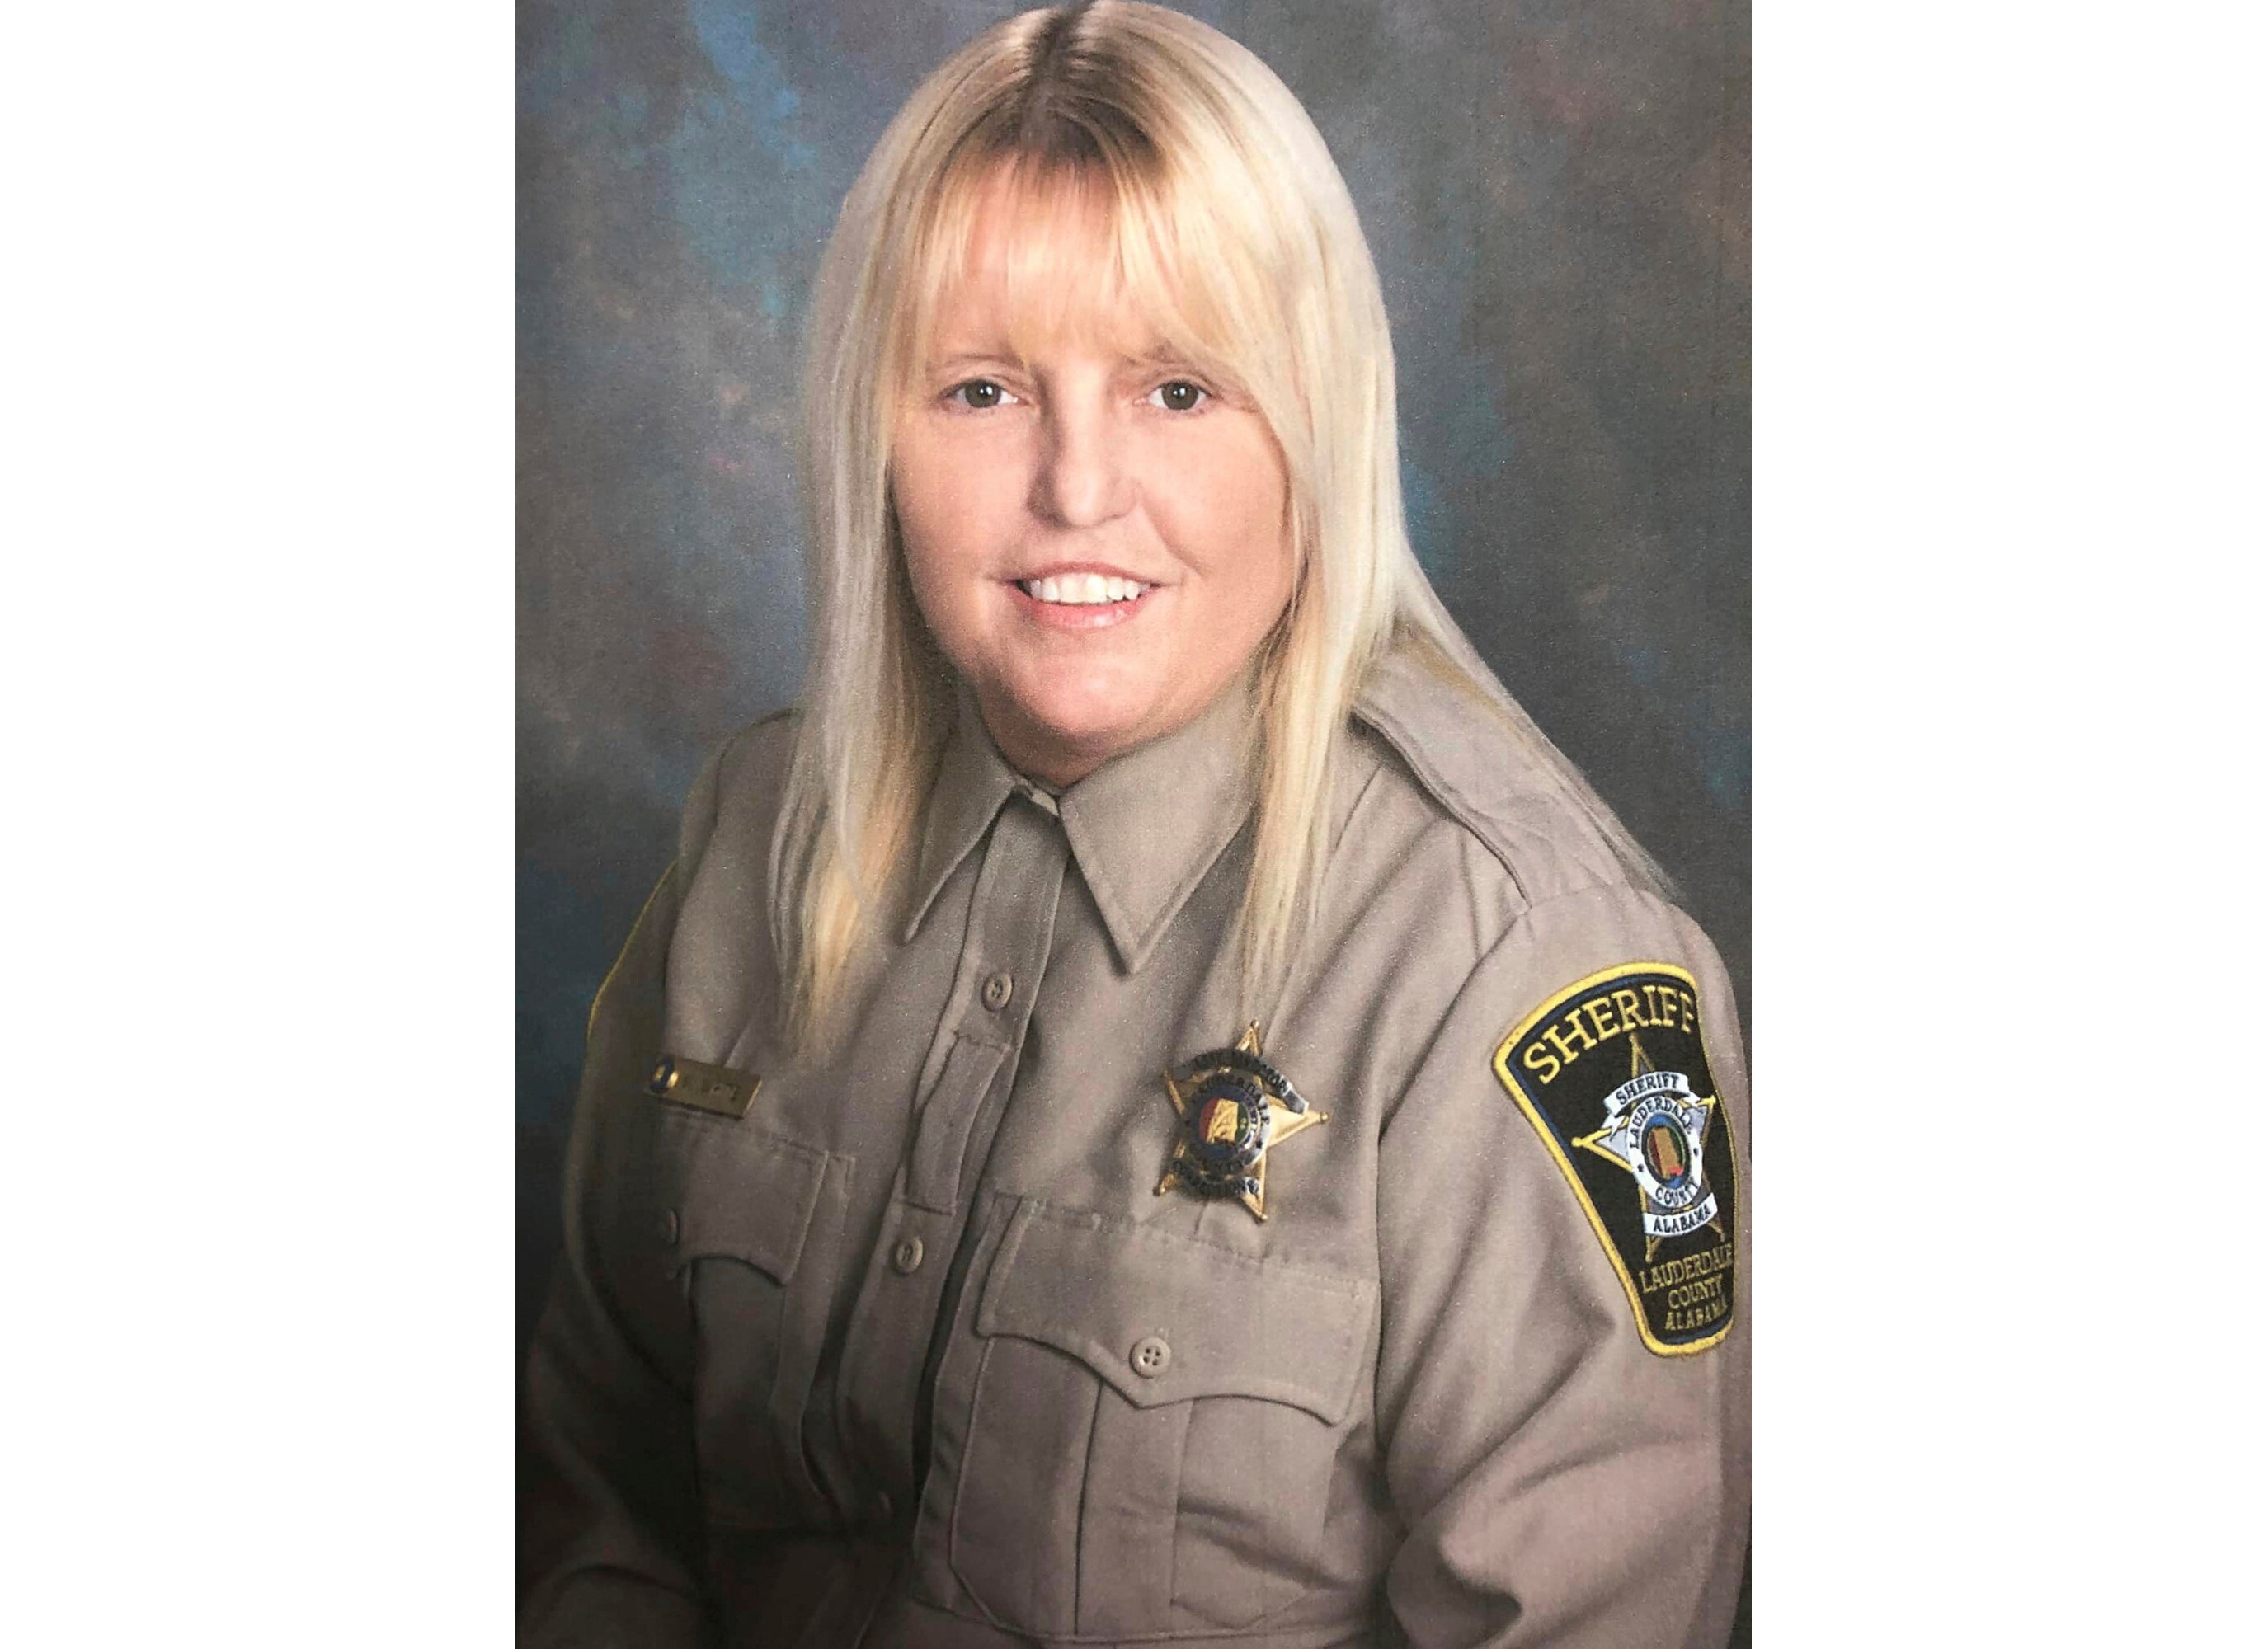 Alabama correctional officer Vicki White